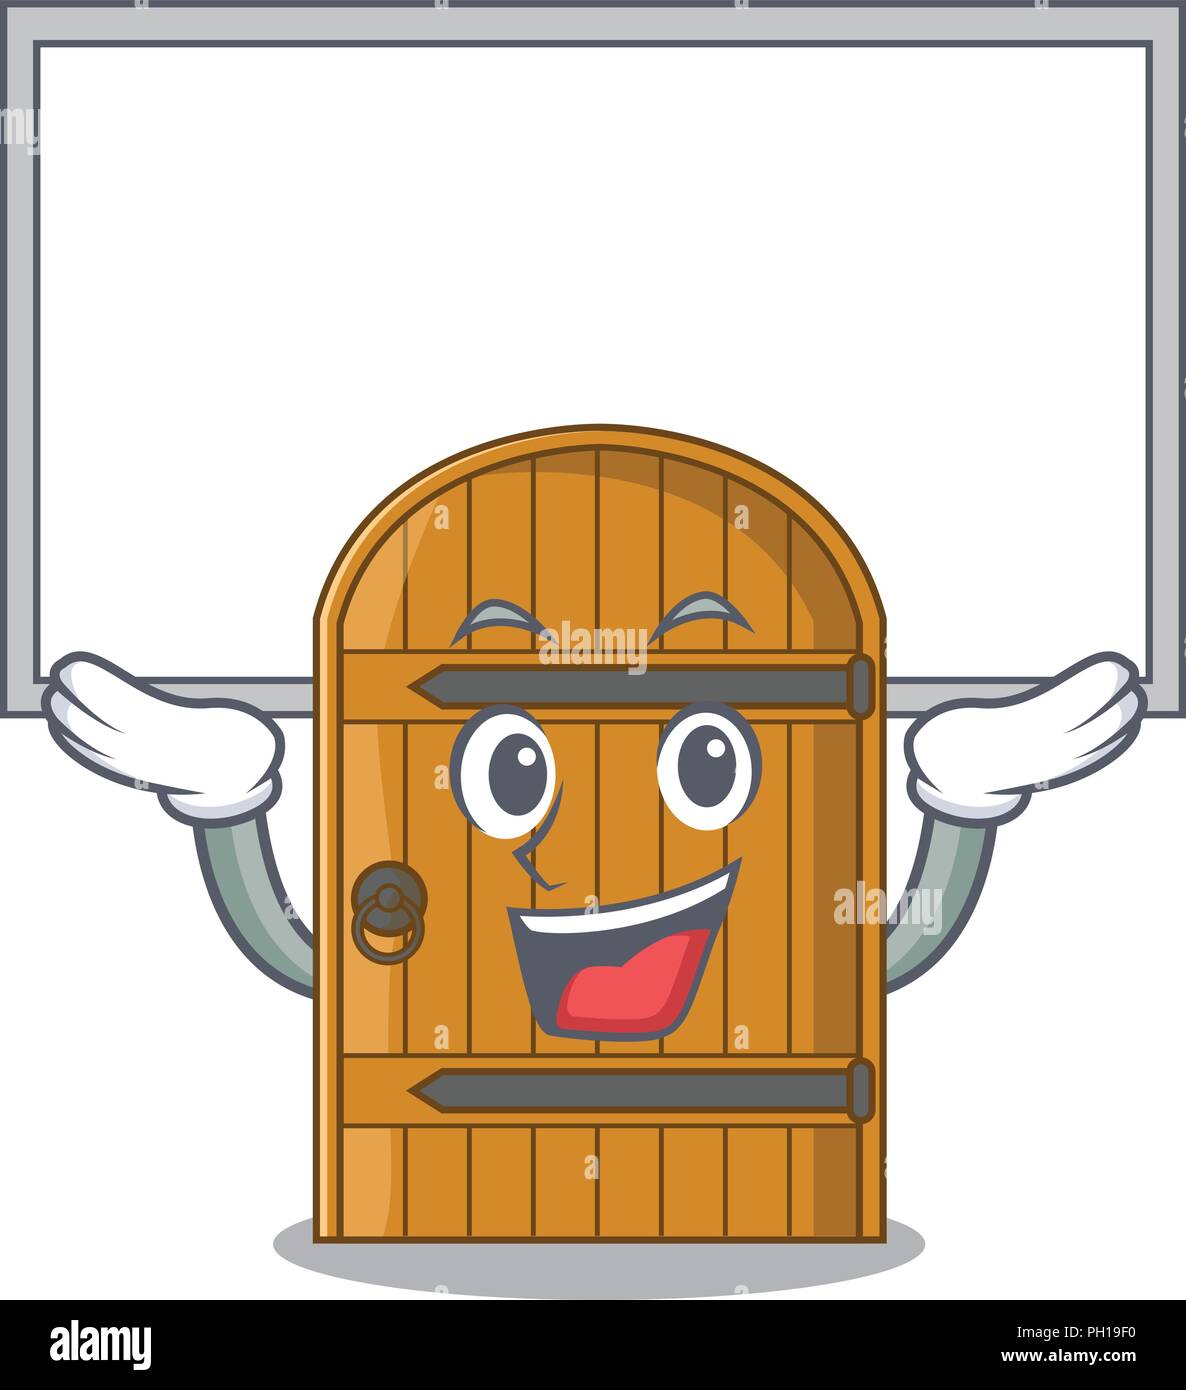 Up board cartoon wooden door massive closed gate vector illustration Stock  Vector Image & Art - Alamy